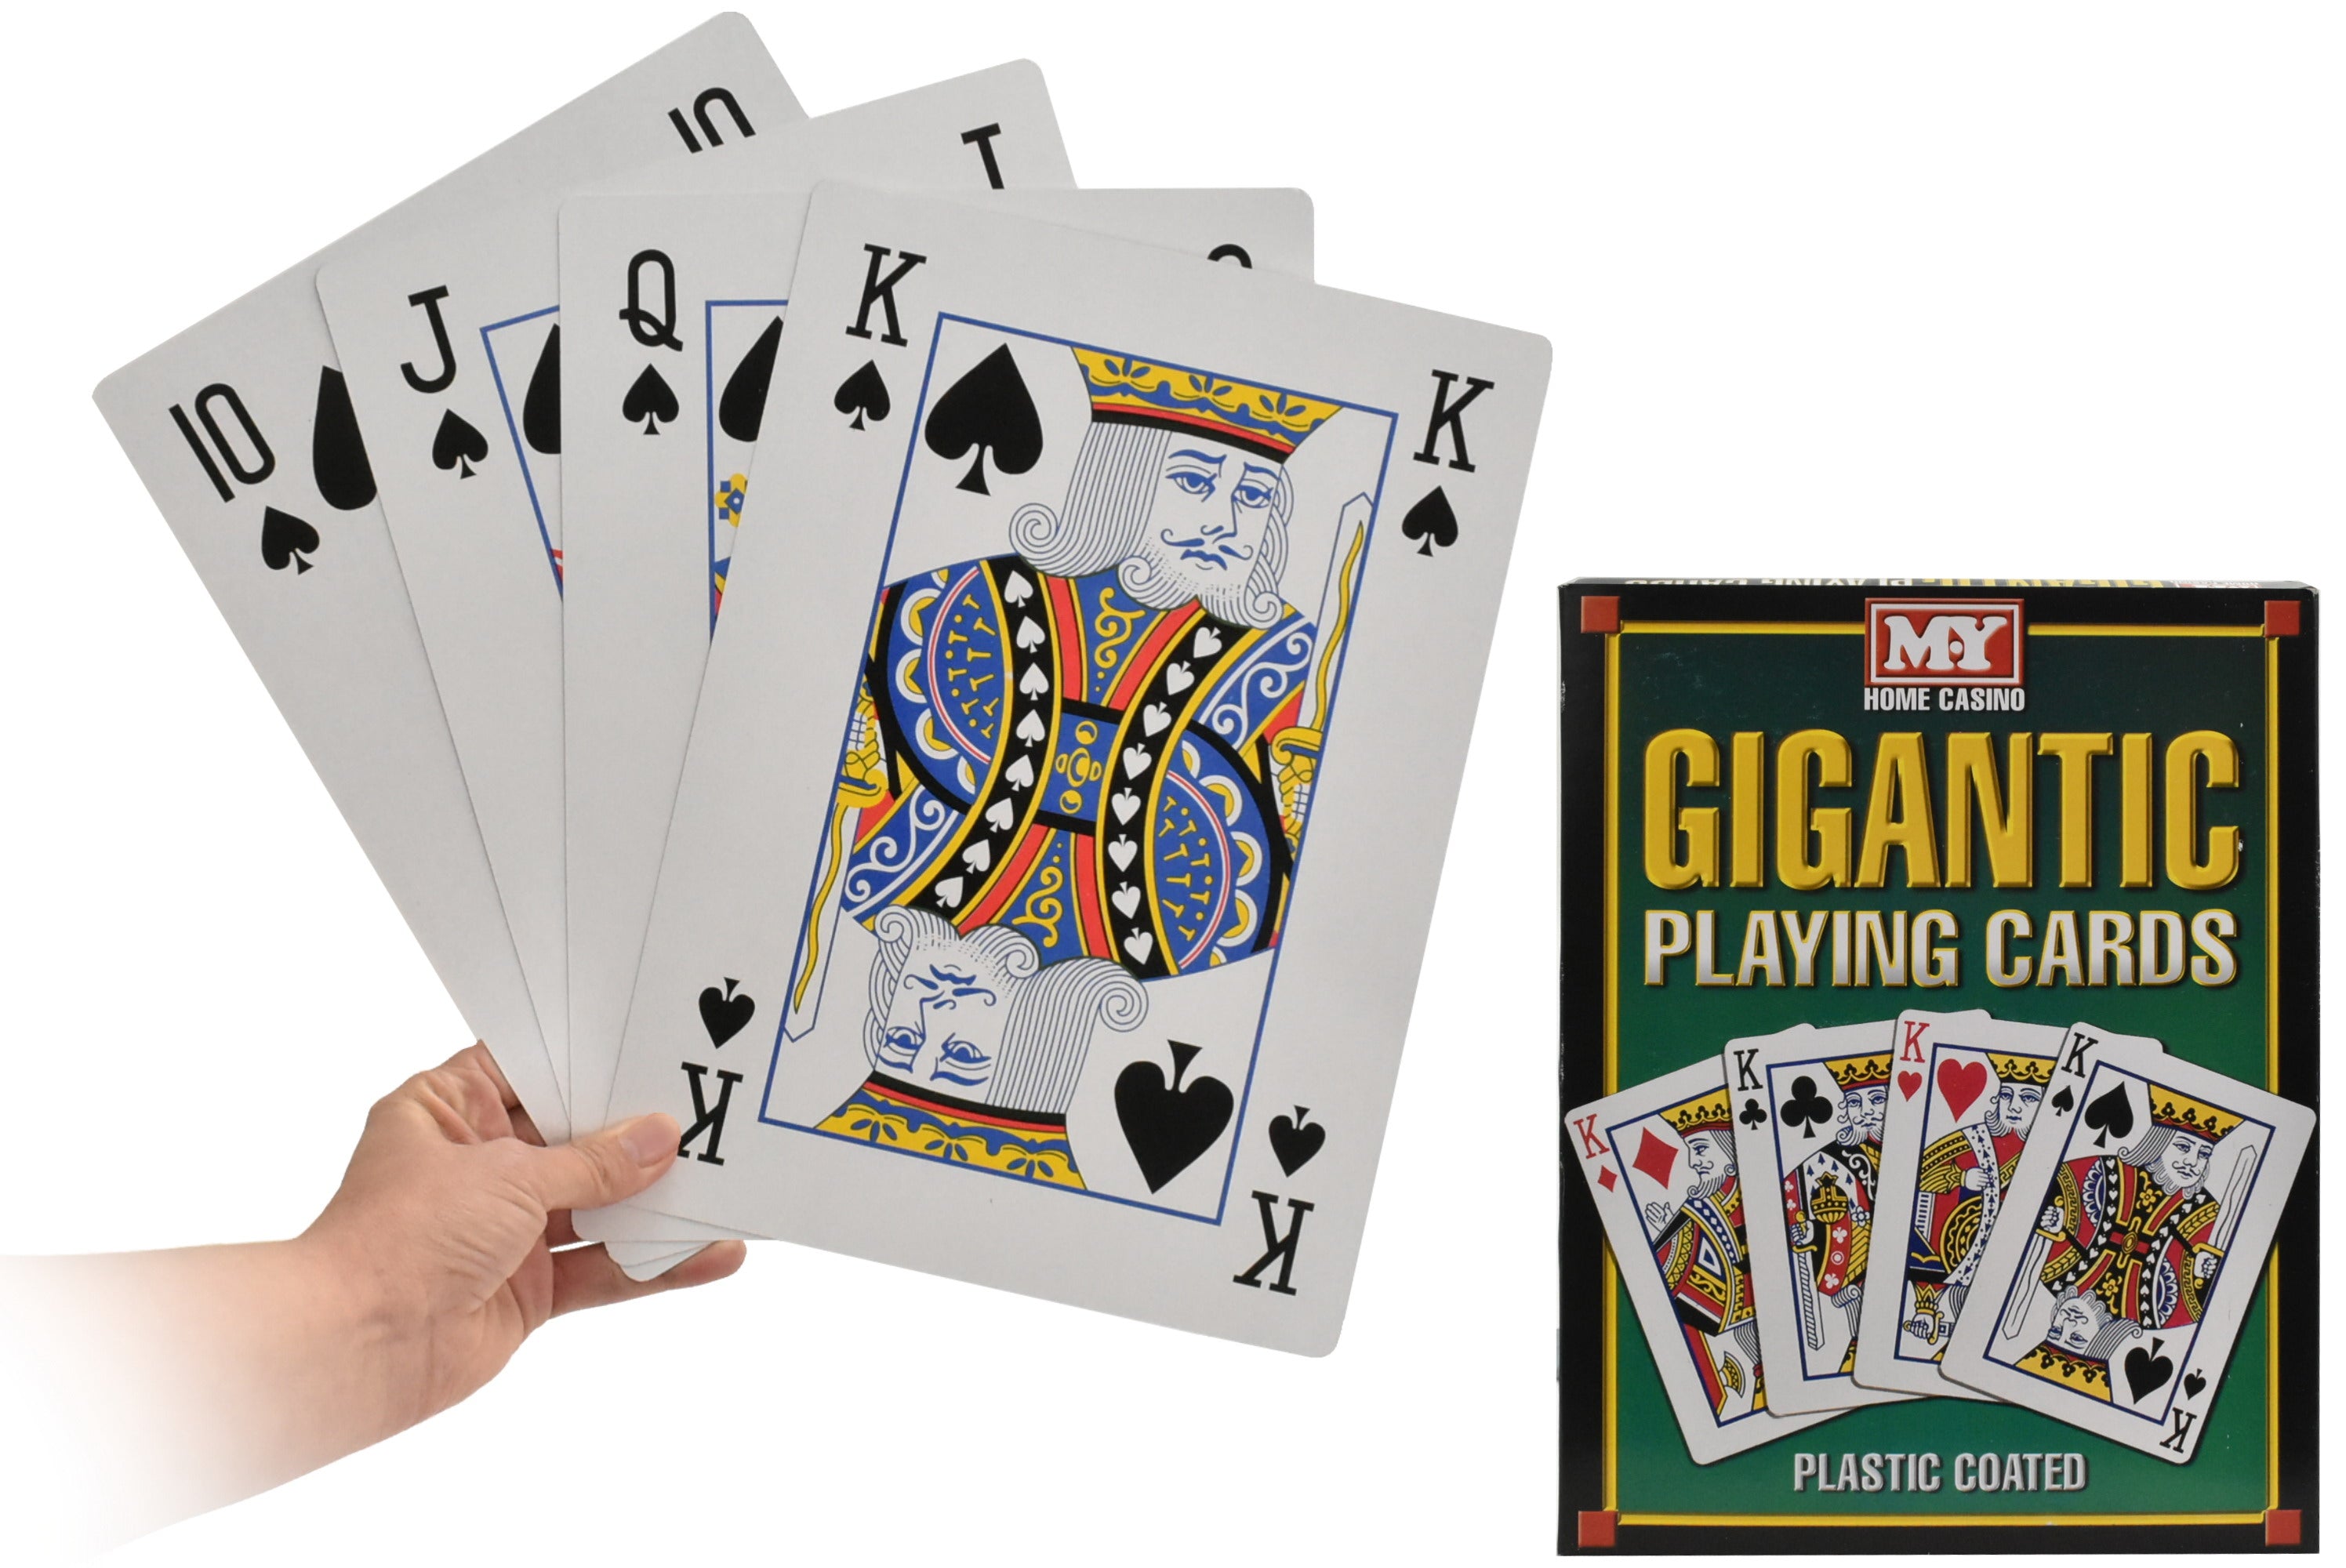 Kandytoys Giant Playing Cards